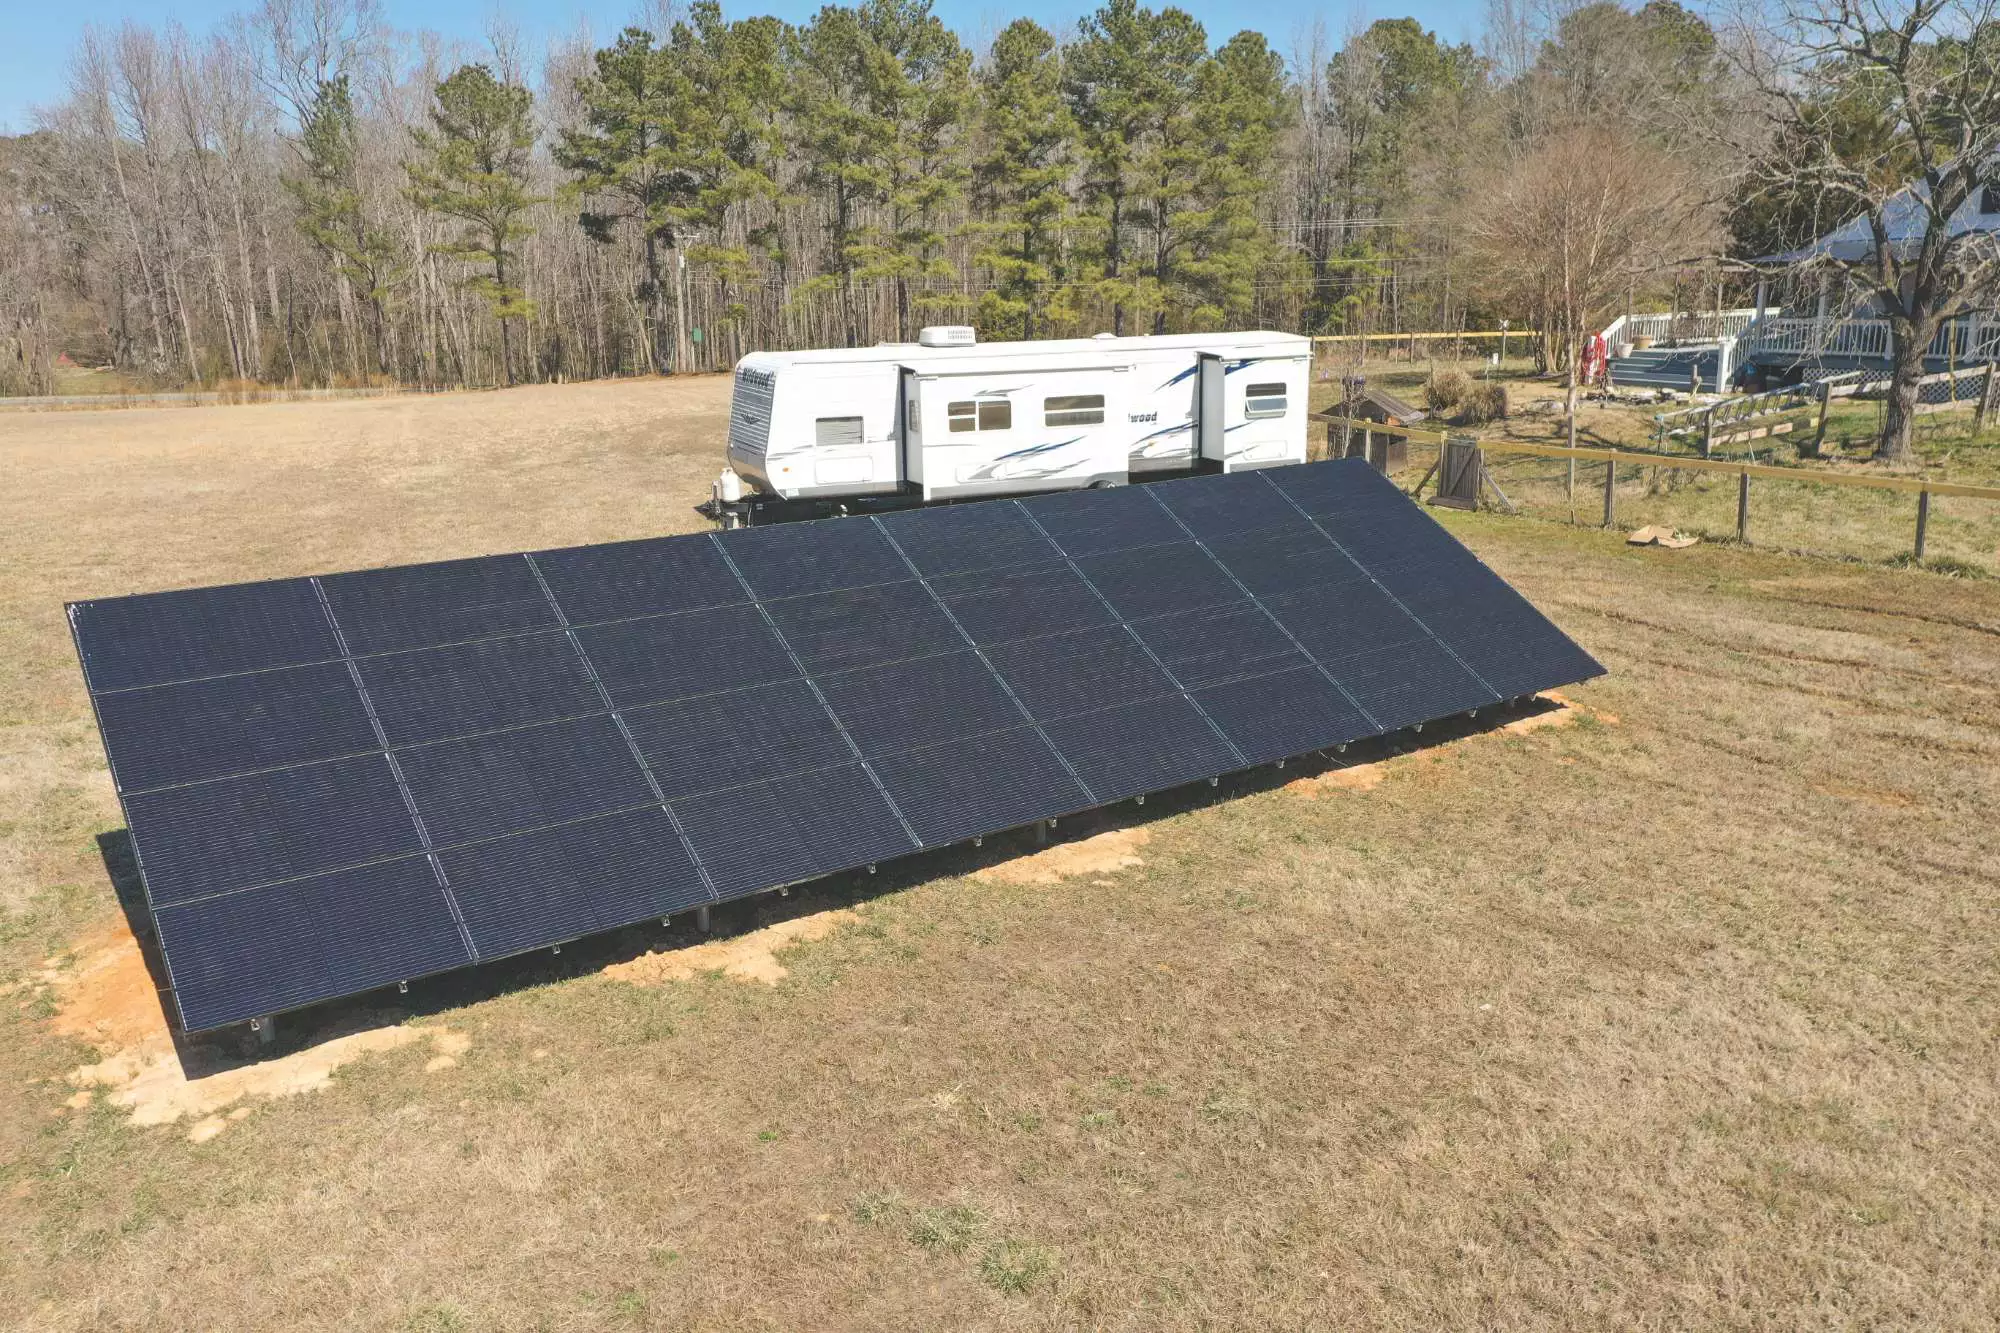 Ground mounted solar panels